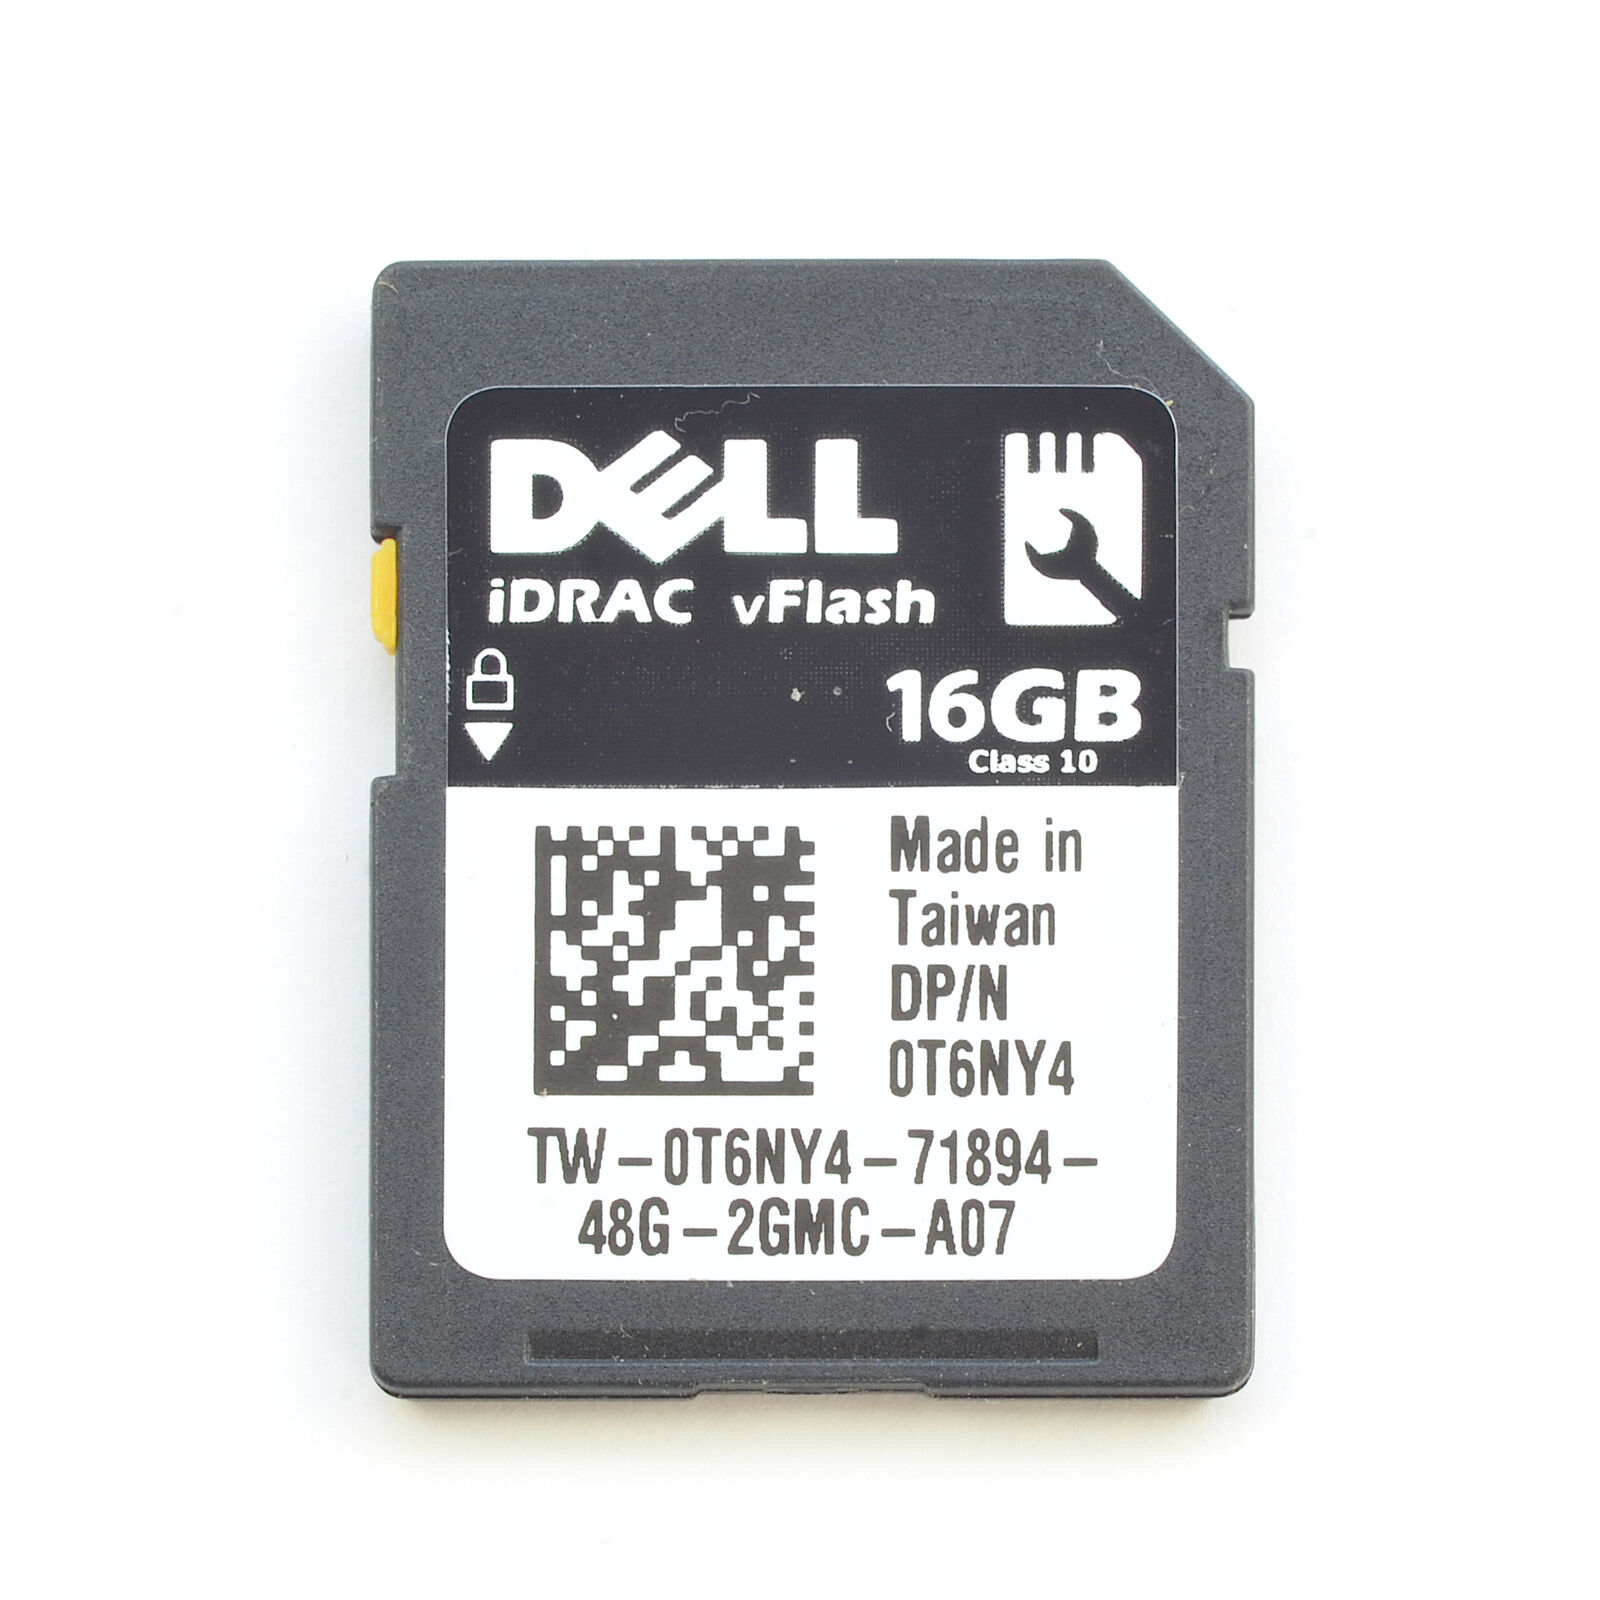 Dell 0T6NY4 16GB iDRAC vFlash C10 SDHC SD Card Module 13 Gen R630 R730 T6NY4